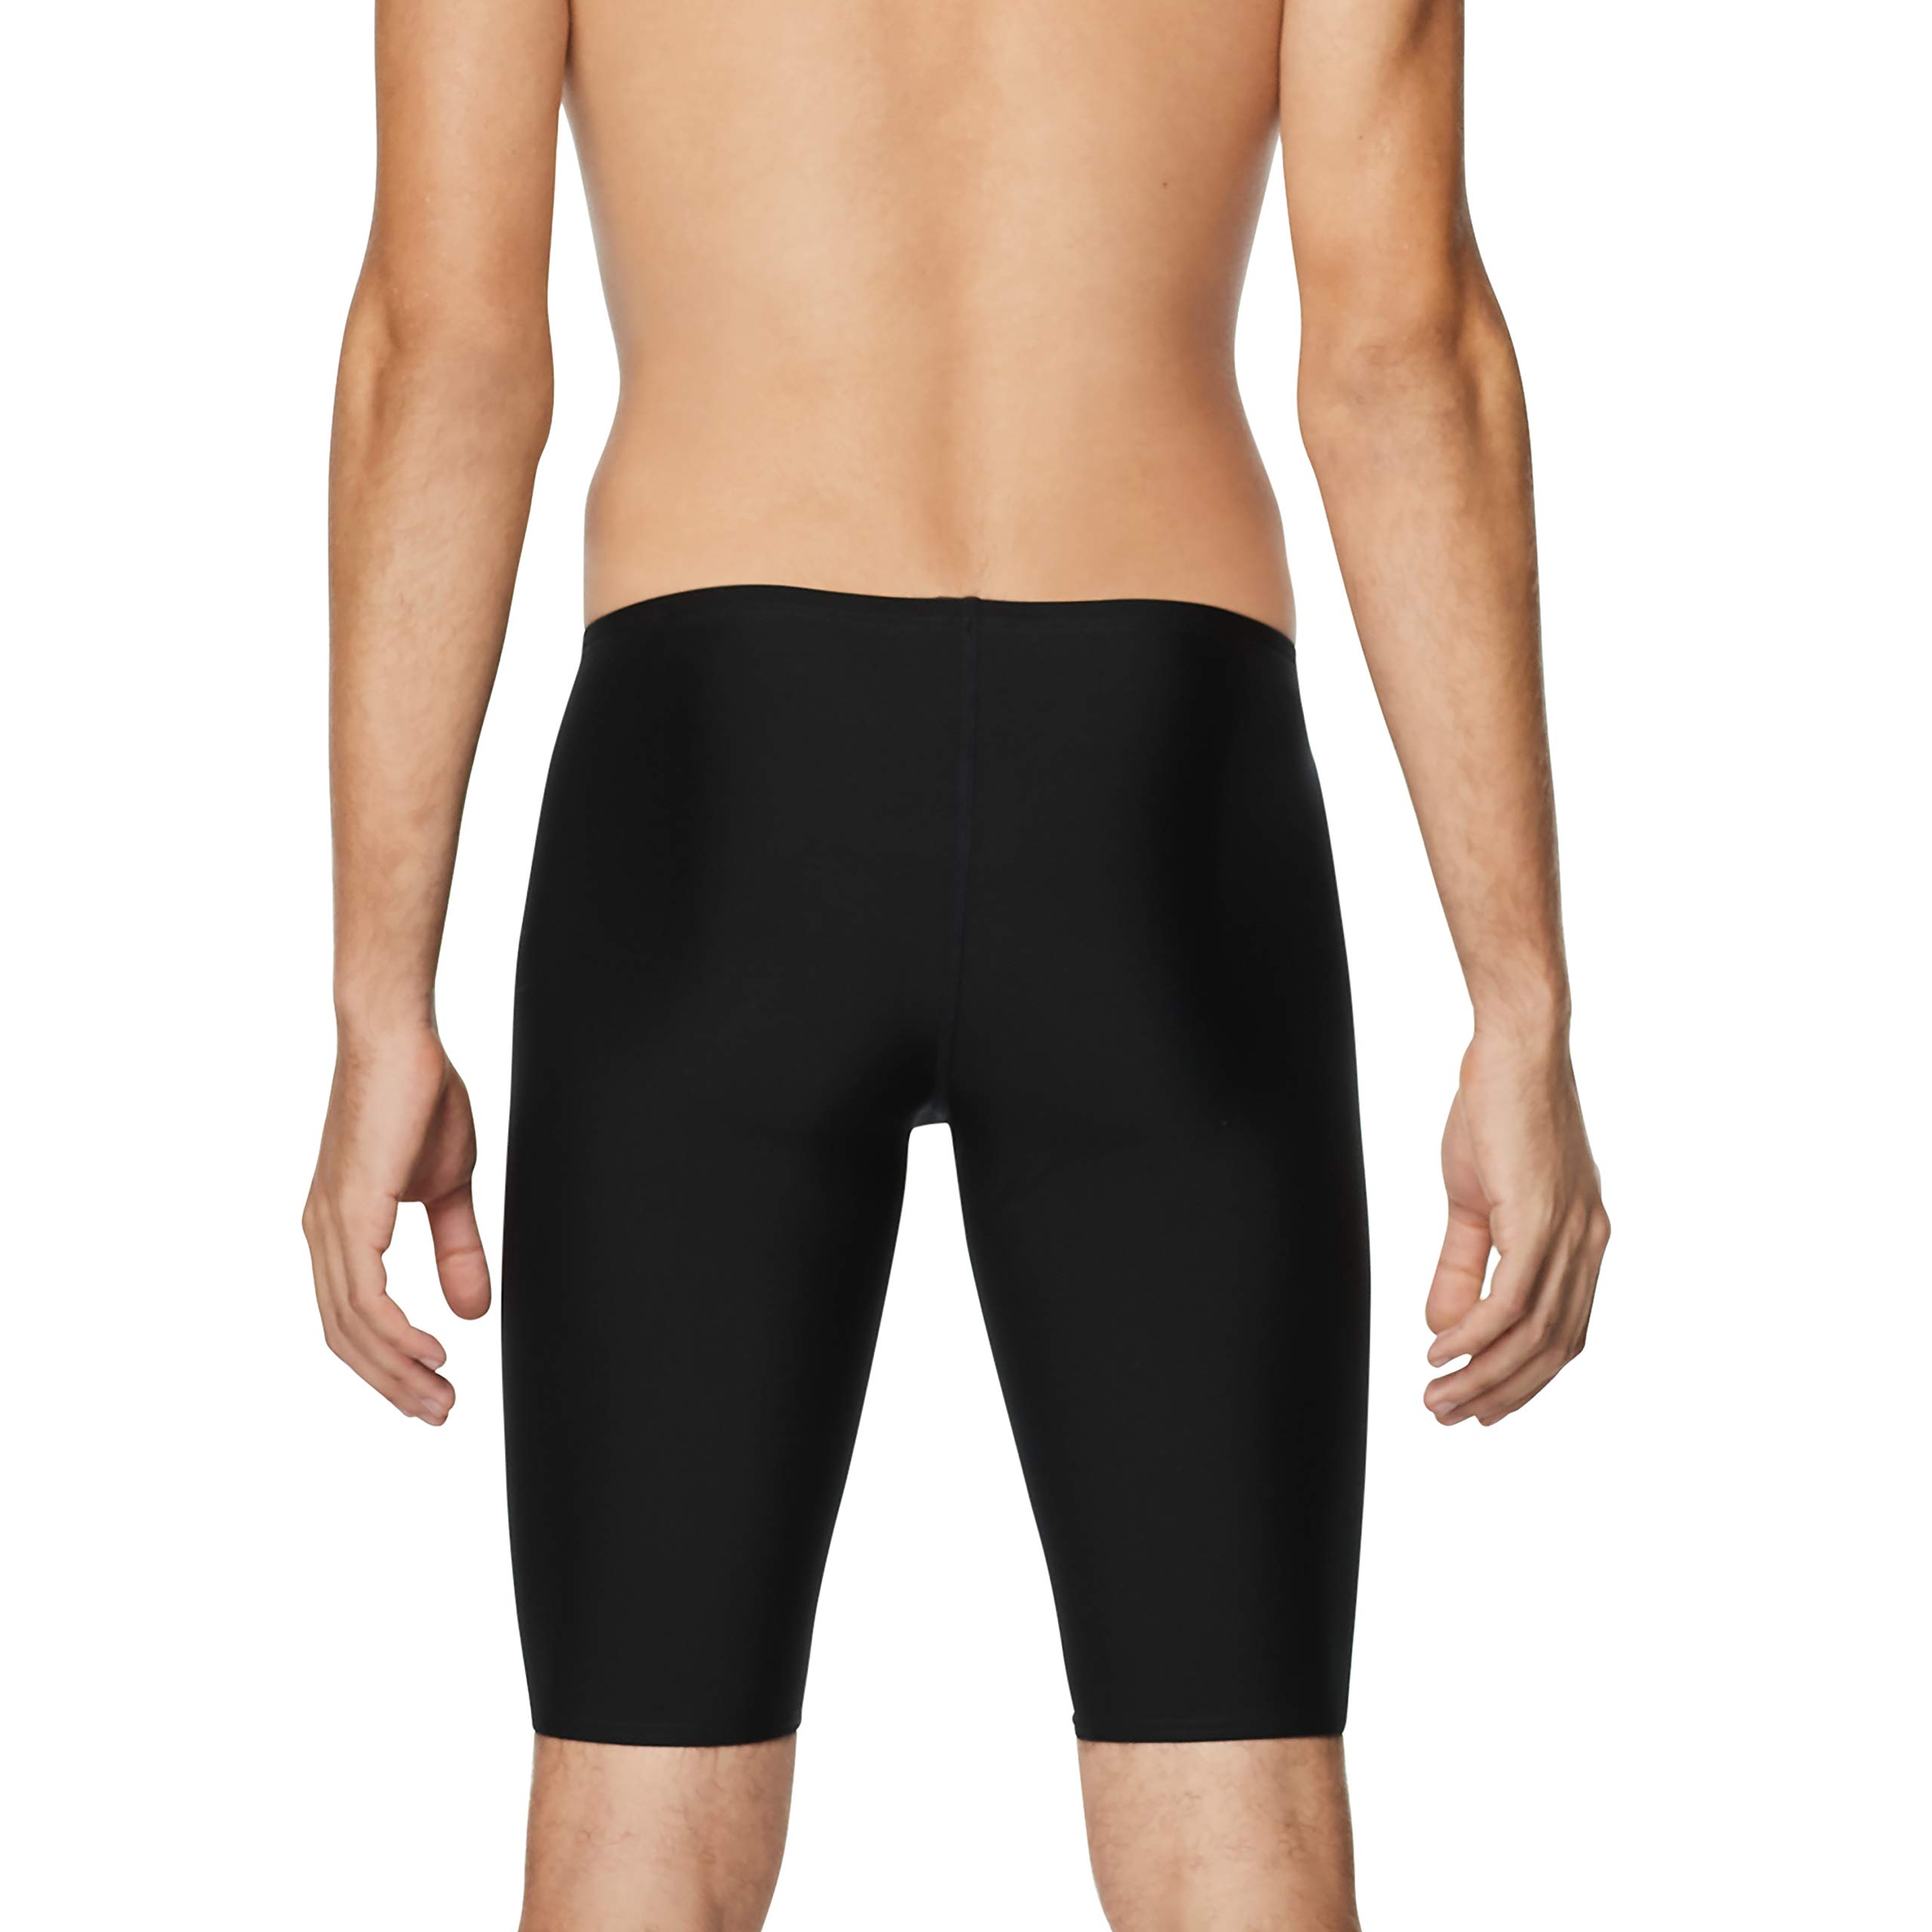 Speedo Men's Swimsuit Jammer Endurance+ Solid USA Adult